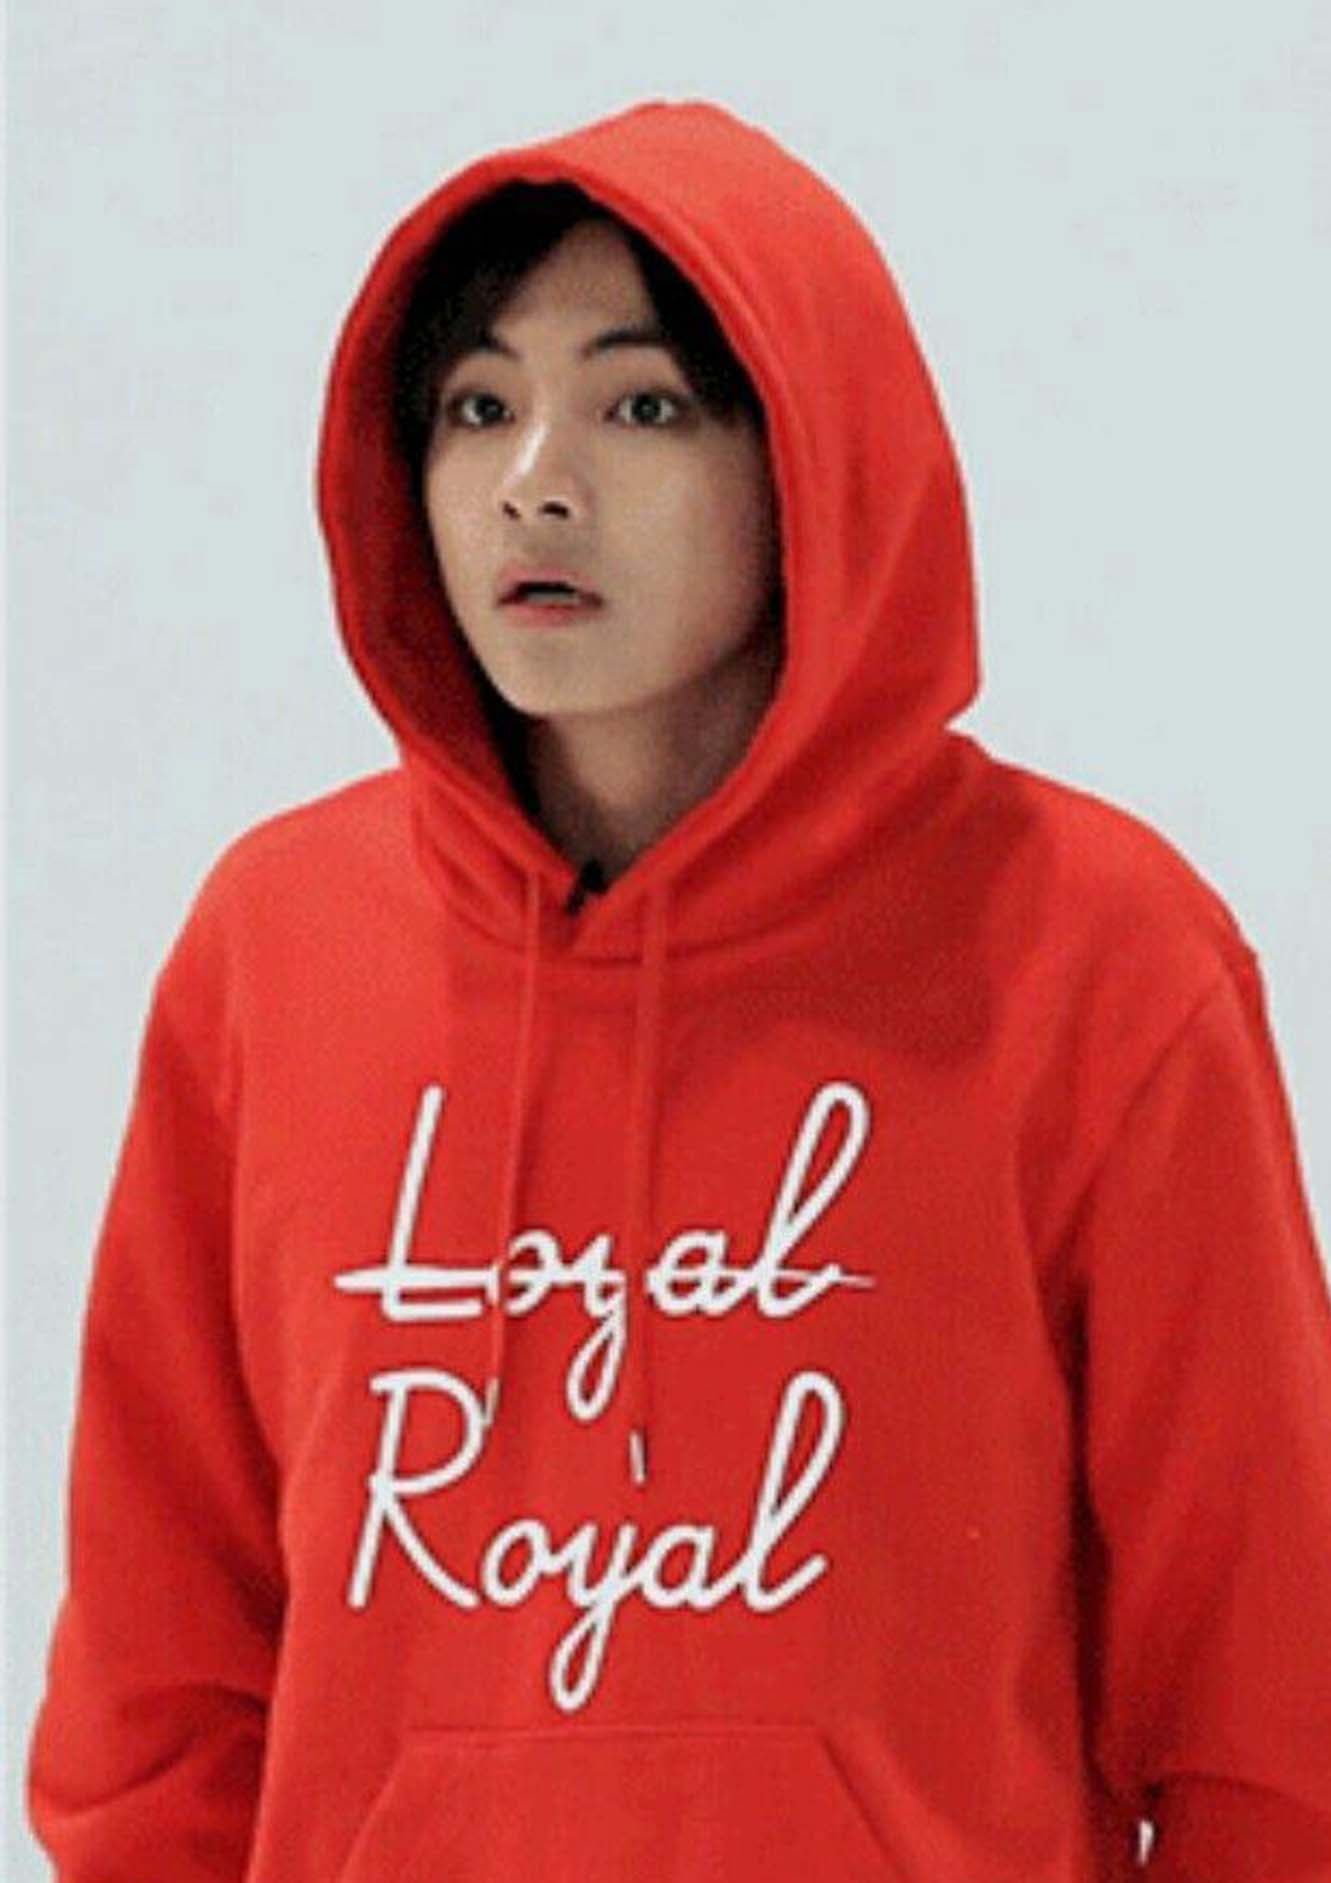 BTS - Taehyung Loyal Royal Unisex Hoodie